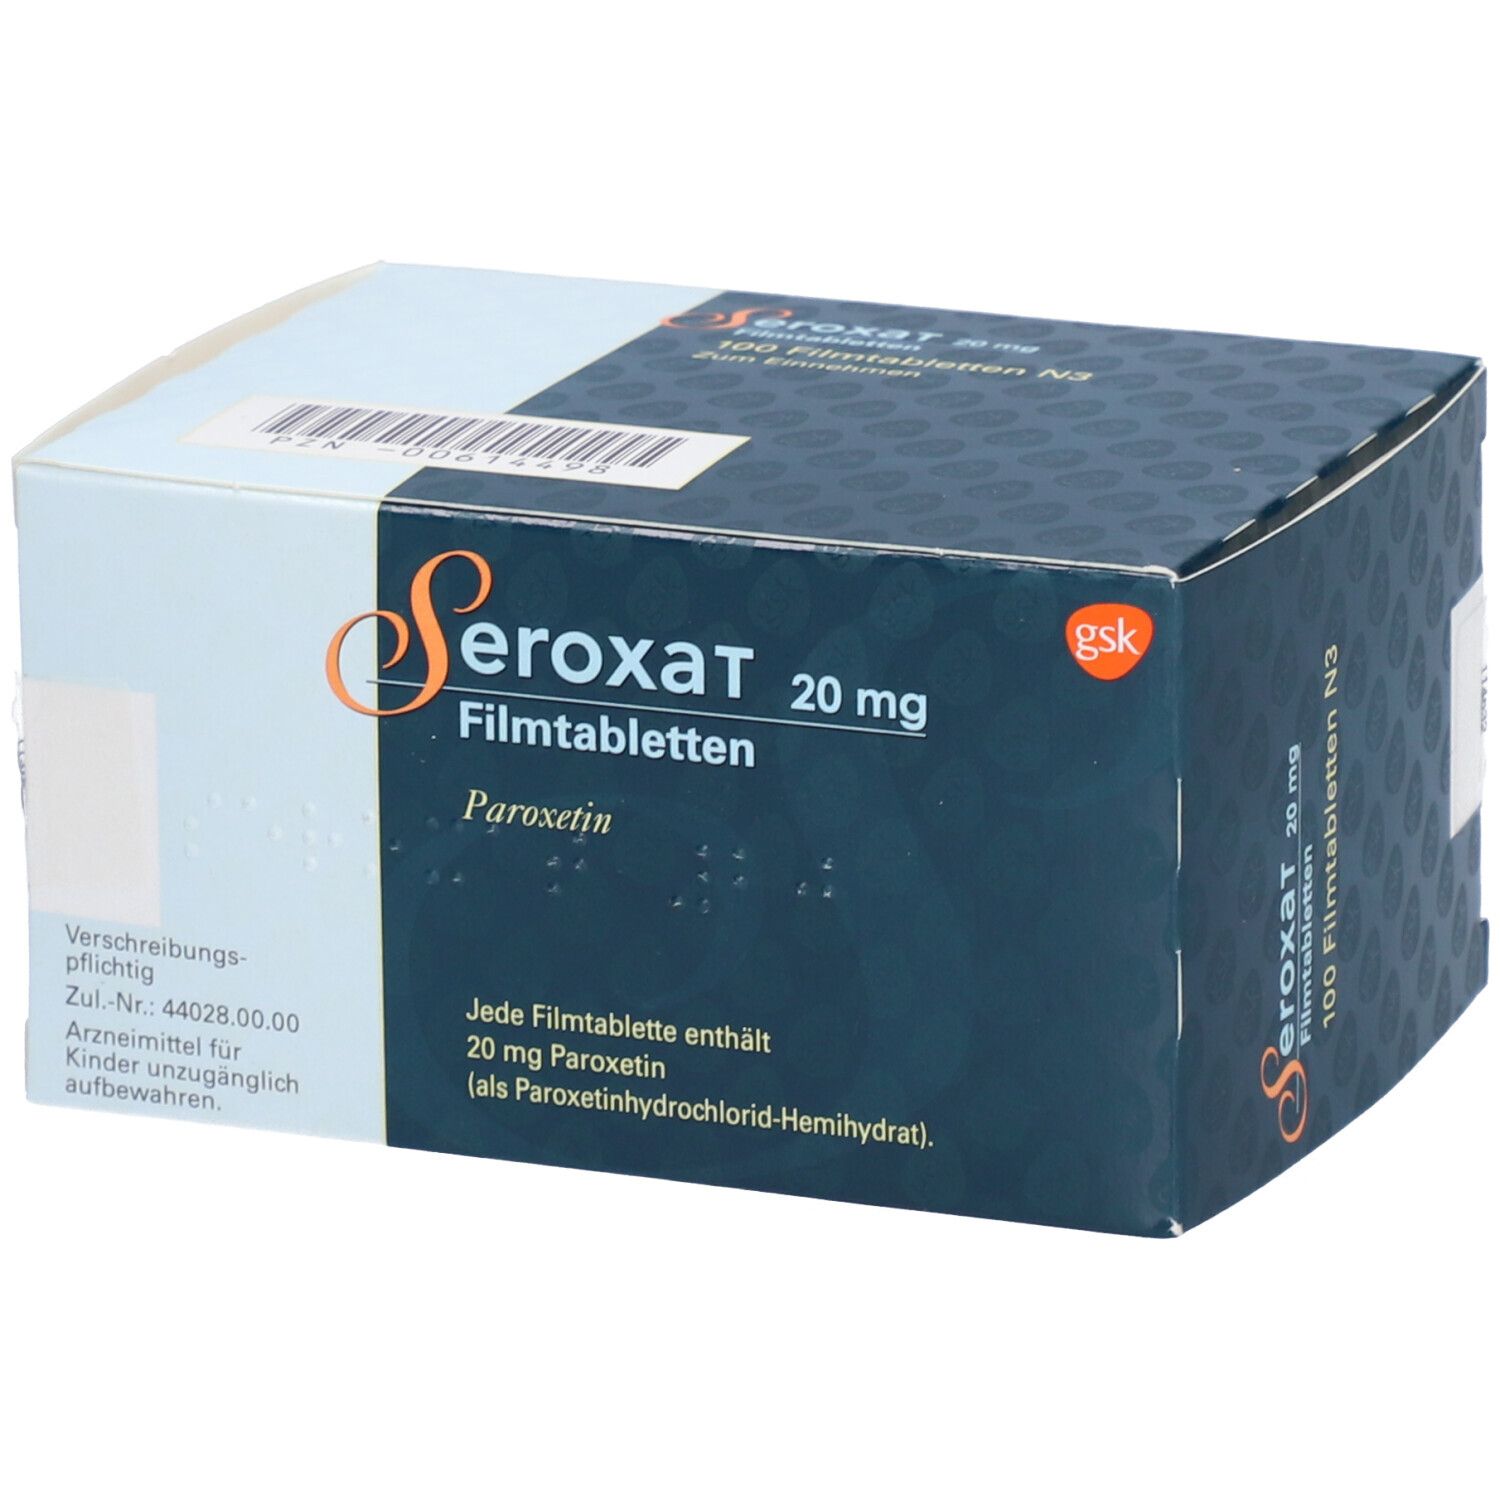 Seroxat® 20 mg